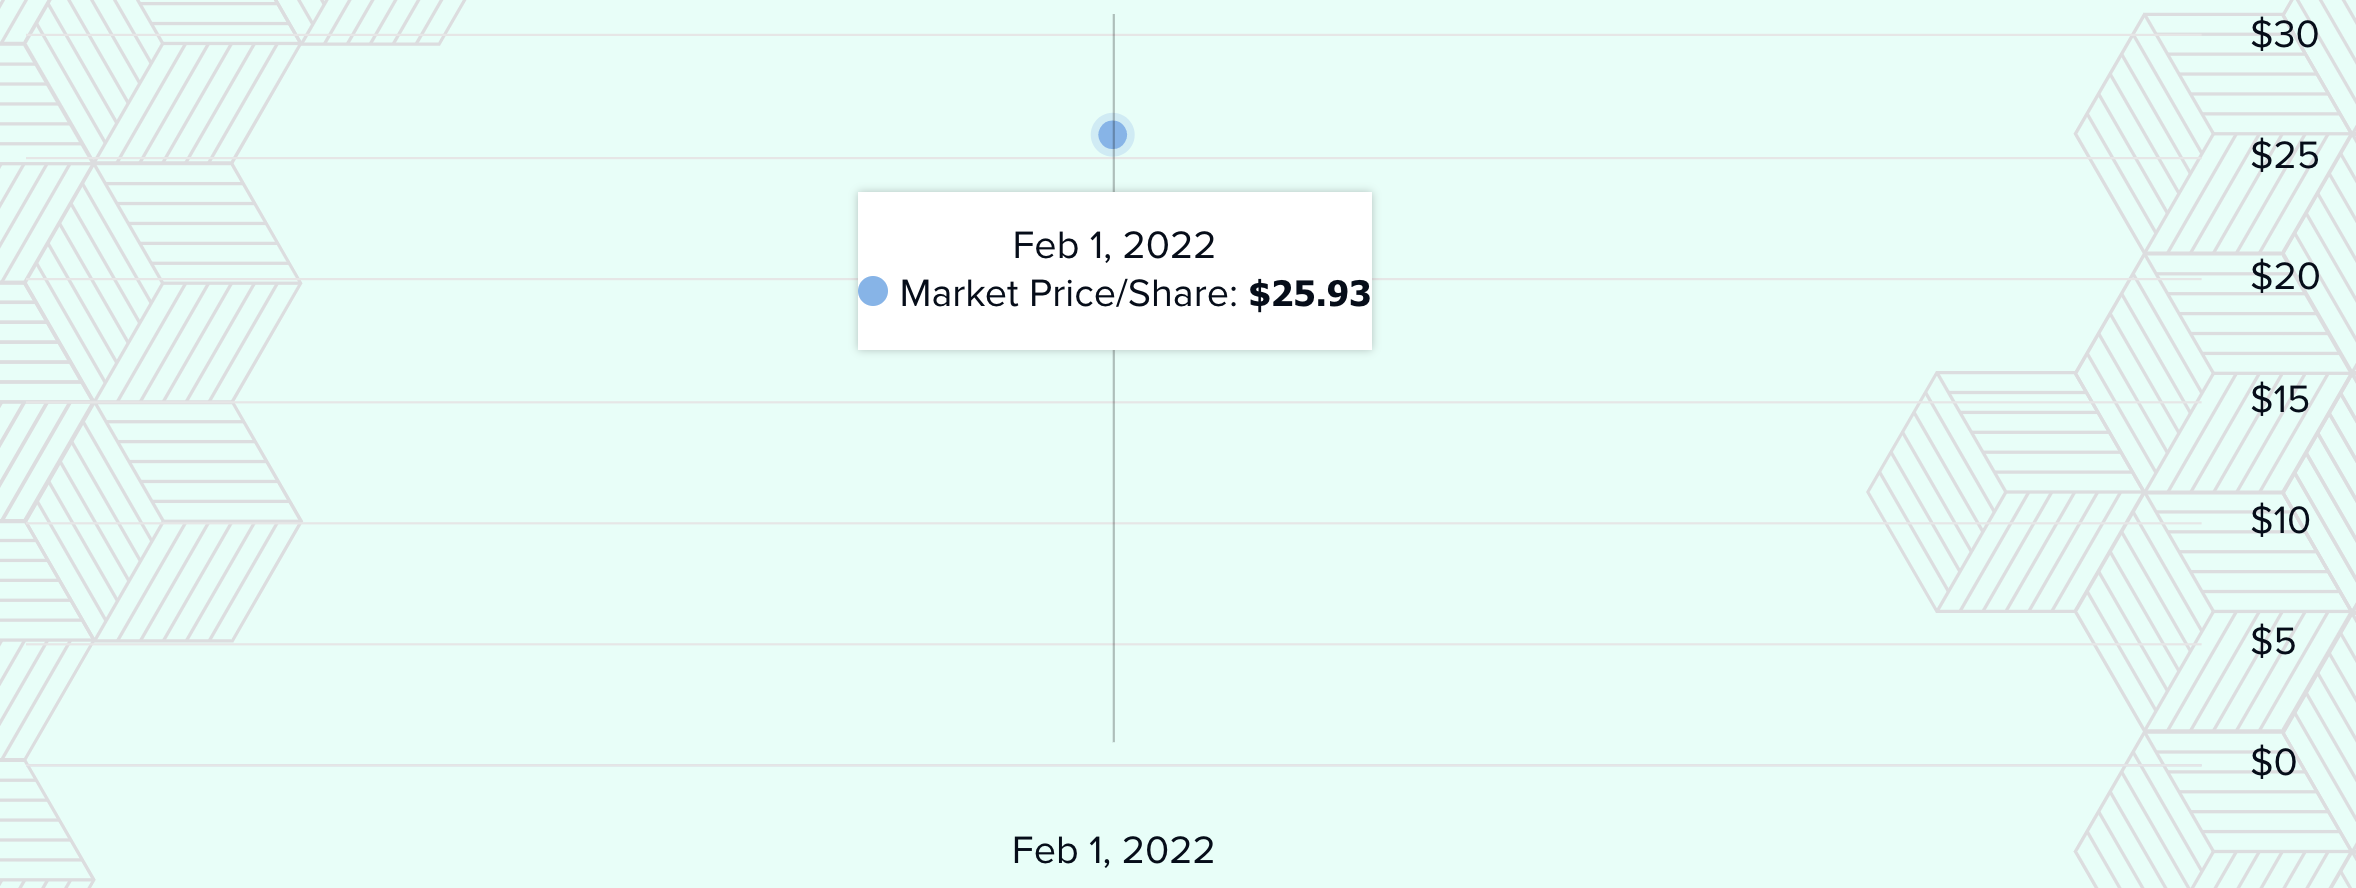 Grayscale GFOF ETF starts trading, Feb 2022